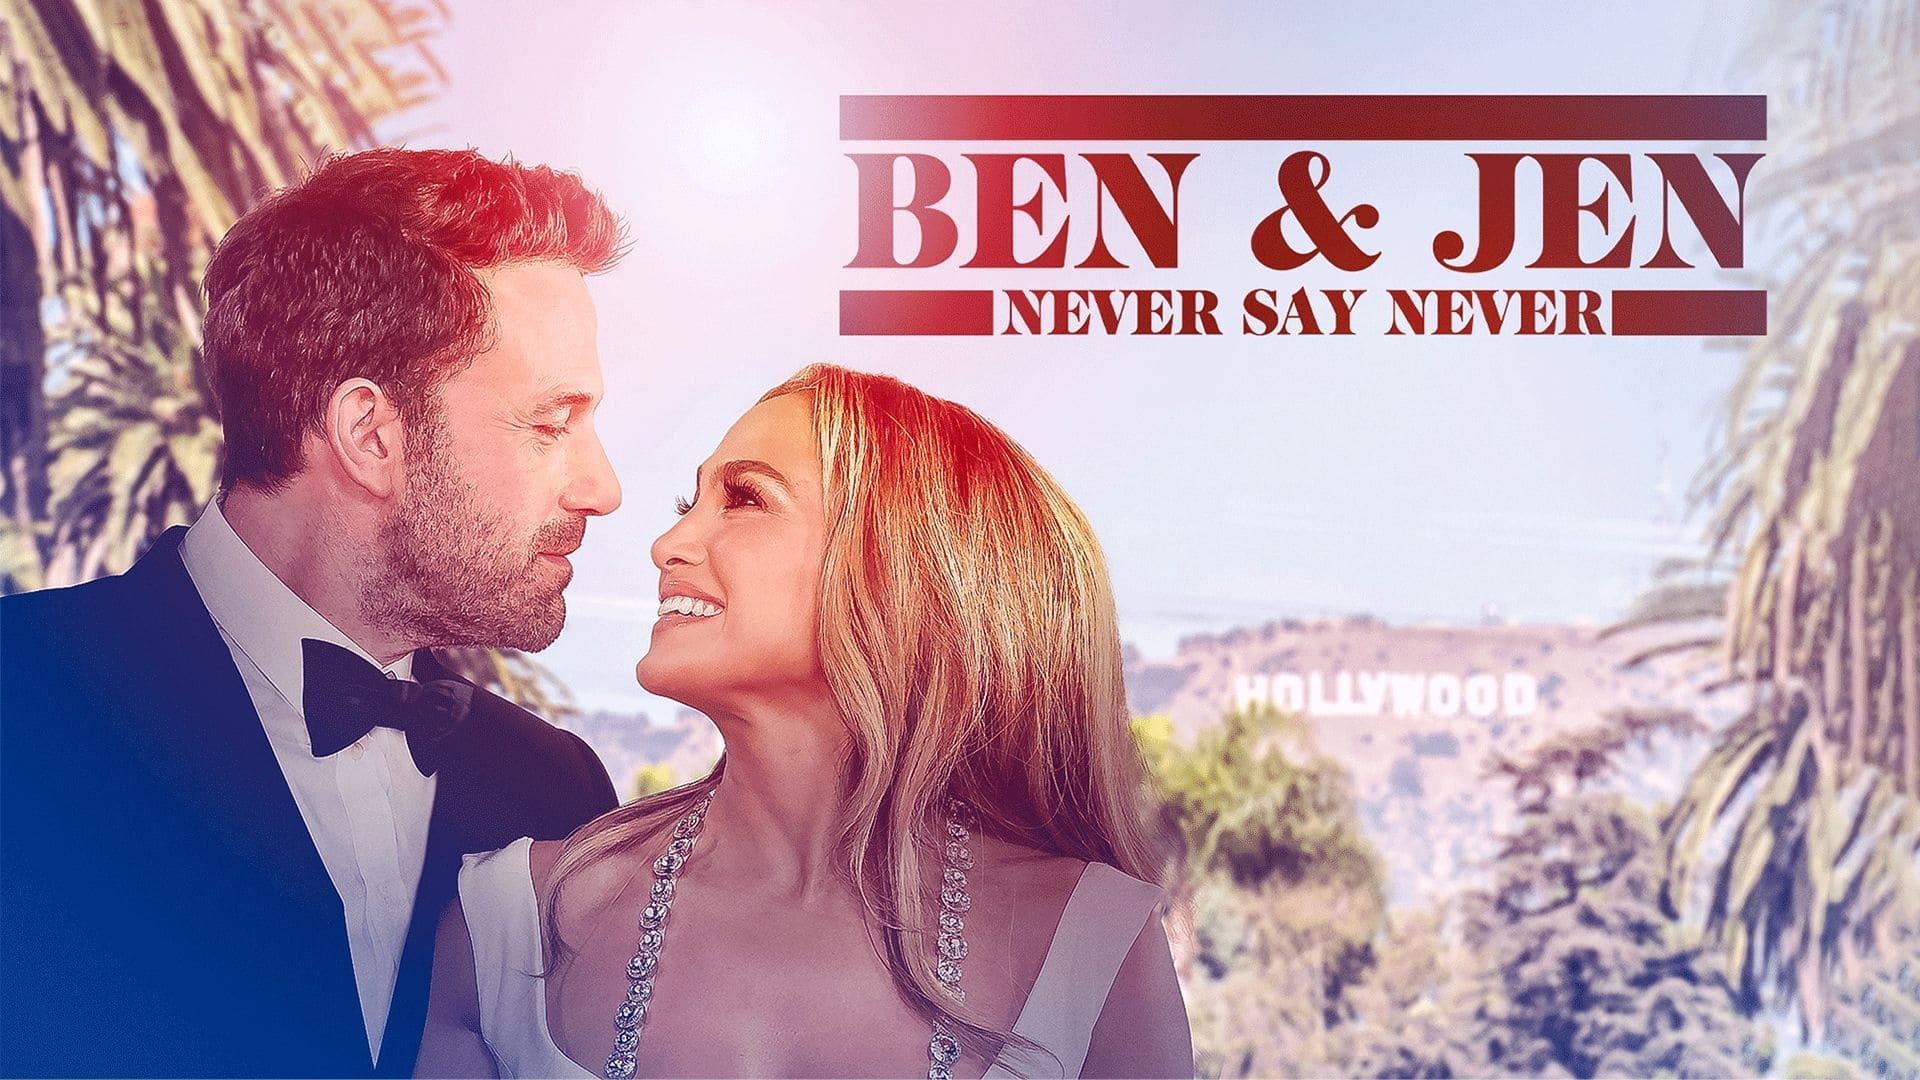 Ben Affleck & Jennifer Lopez: Never Say Never background